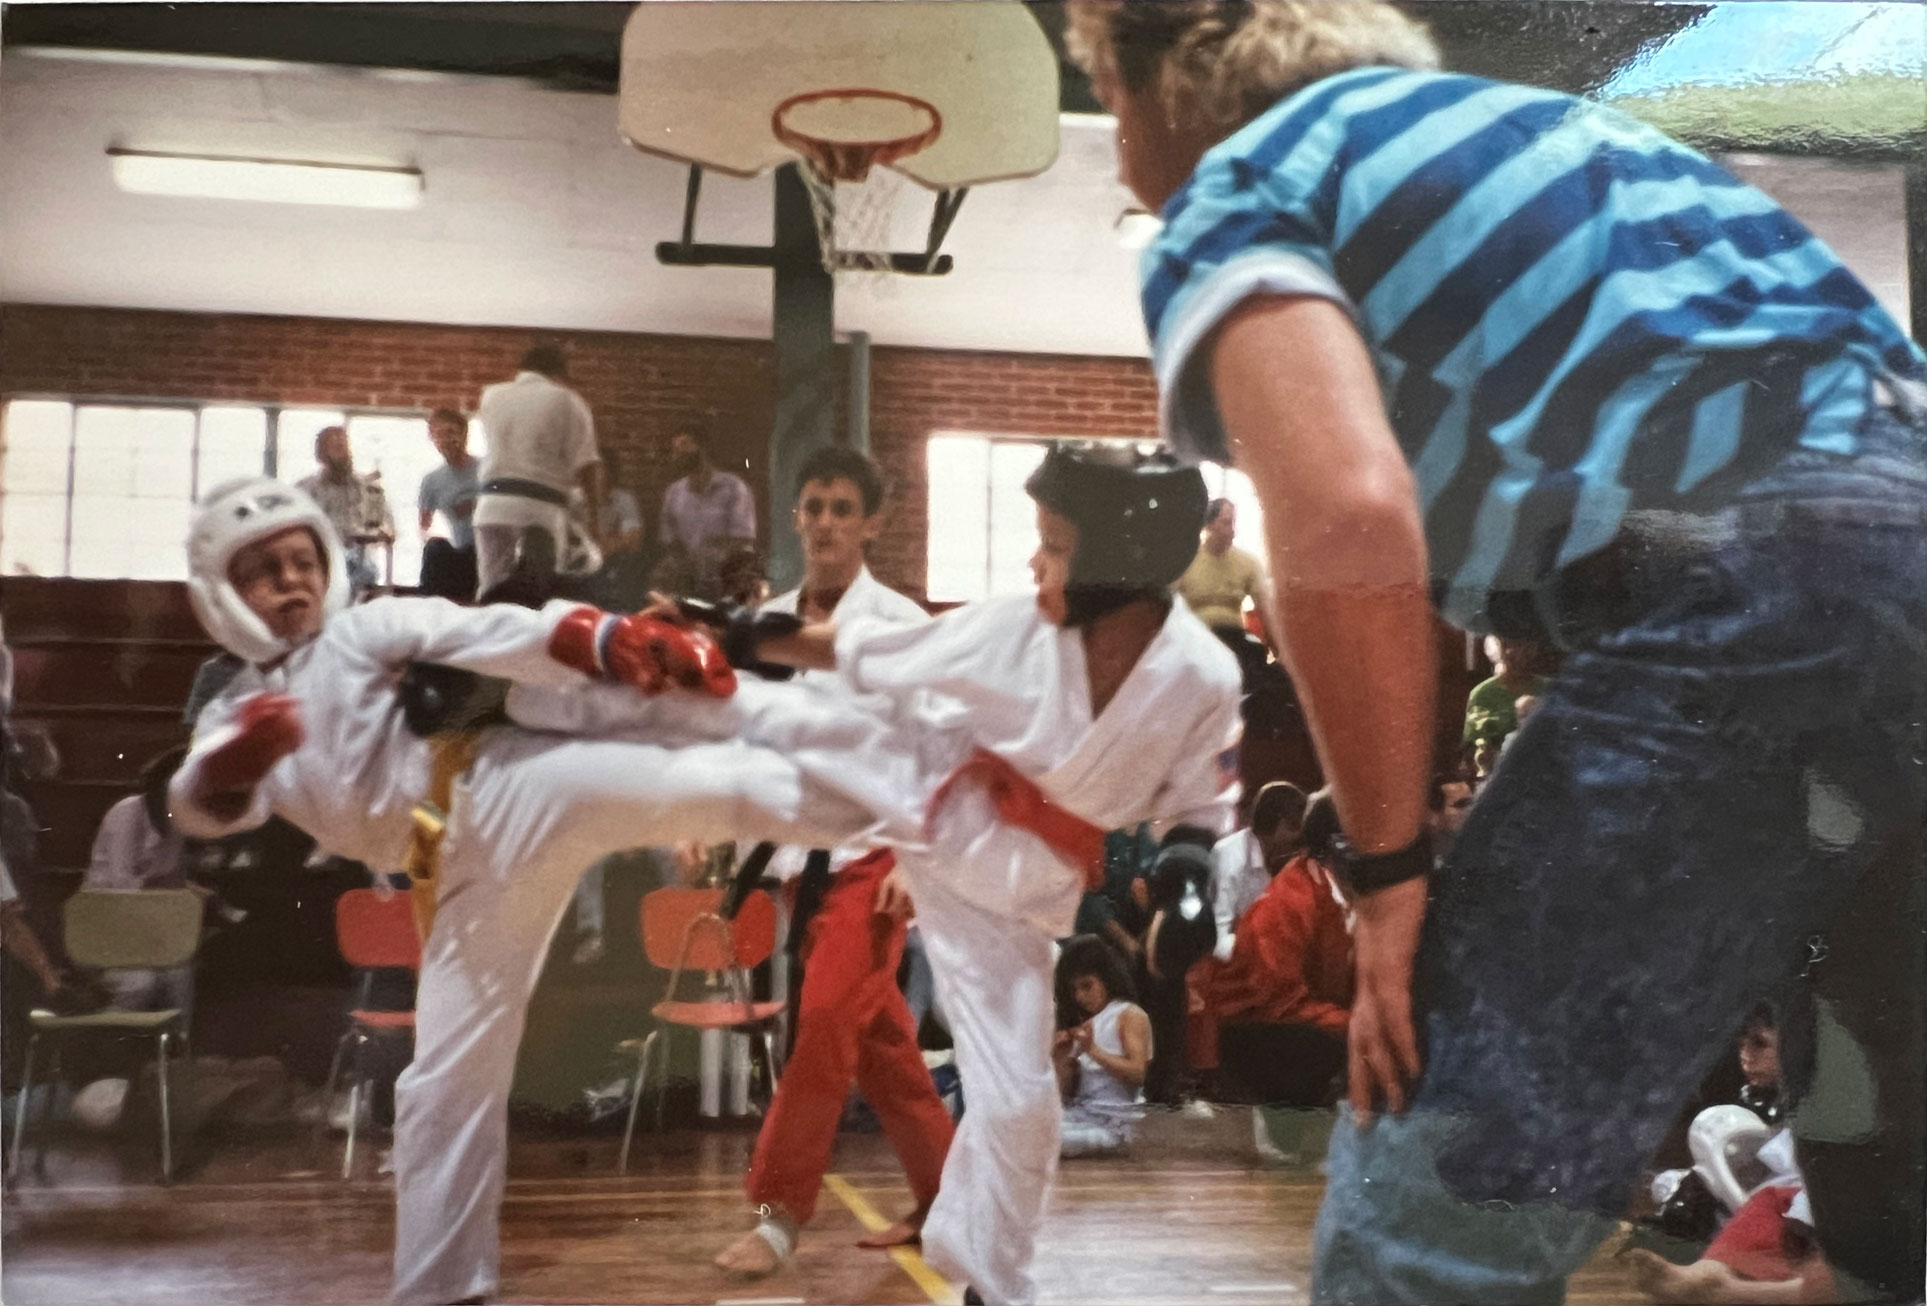 Lee Eason's first karate tournament